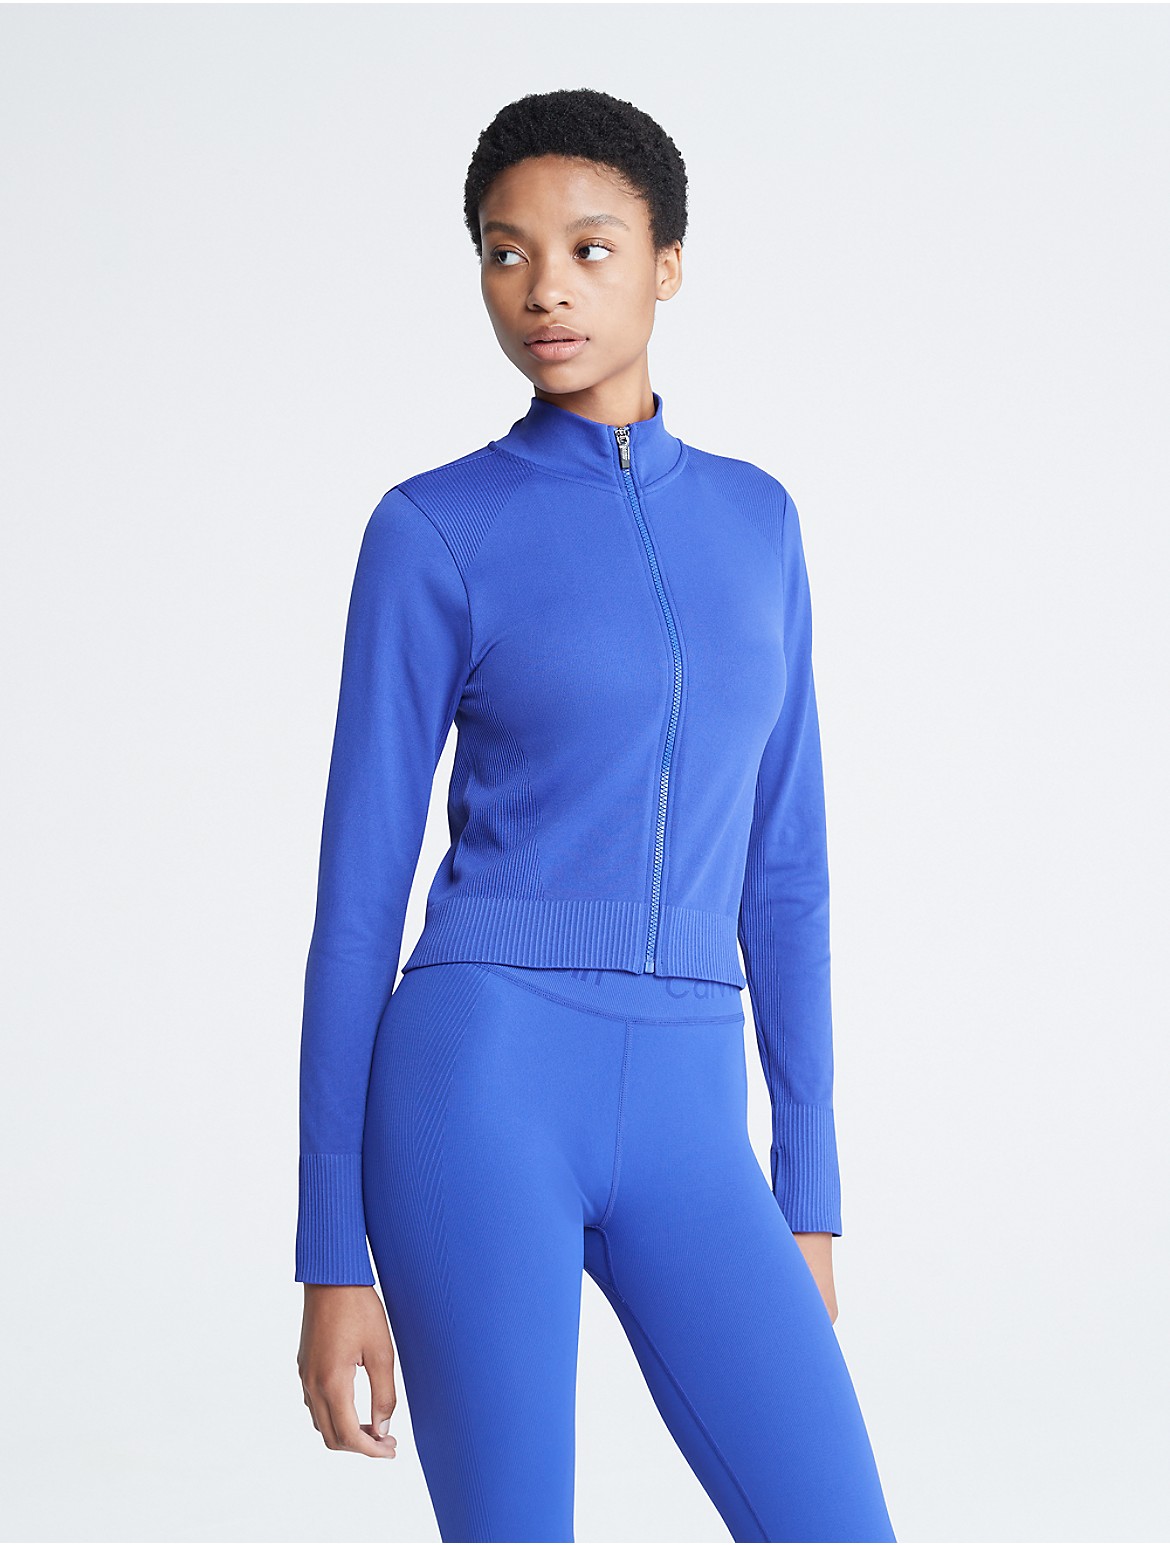 Calvin Klein Women's Performance Seamless Mock Neck Jacket - Blue - XL